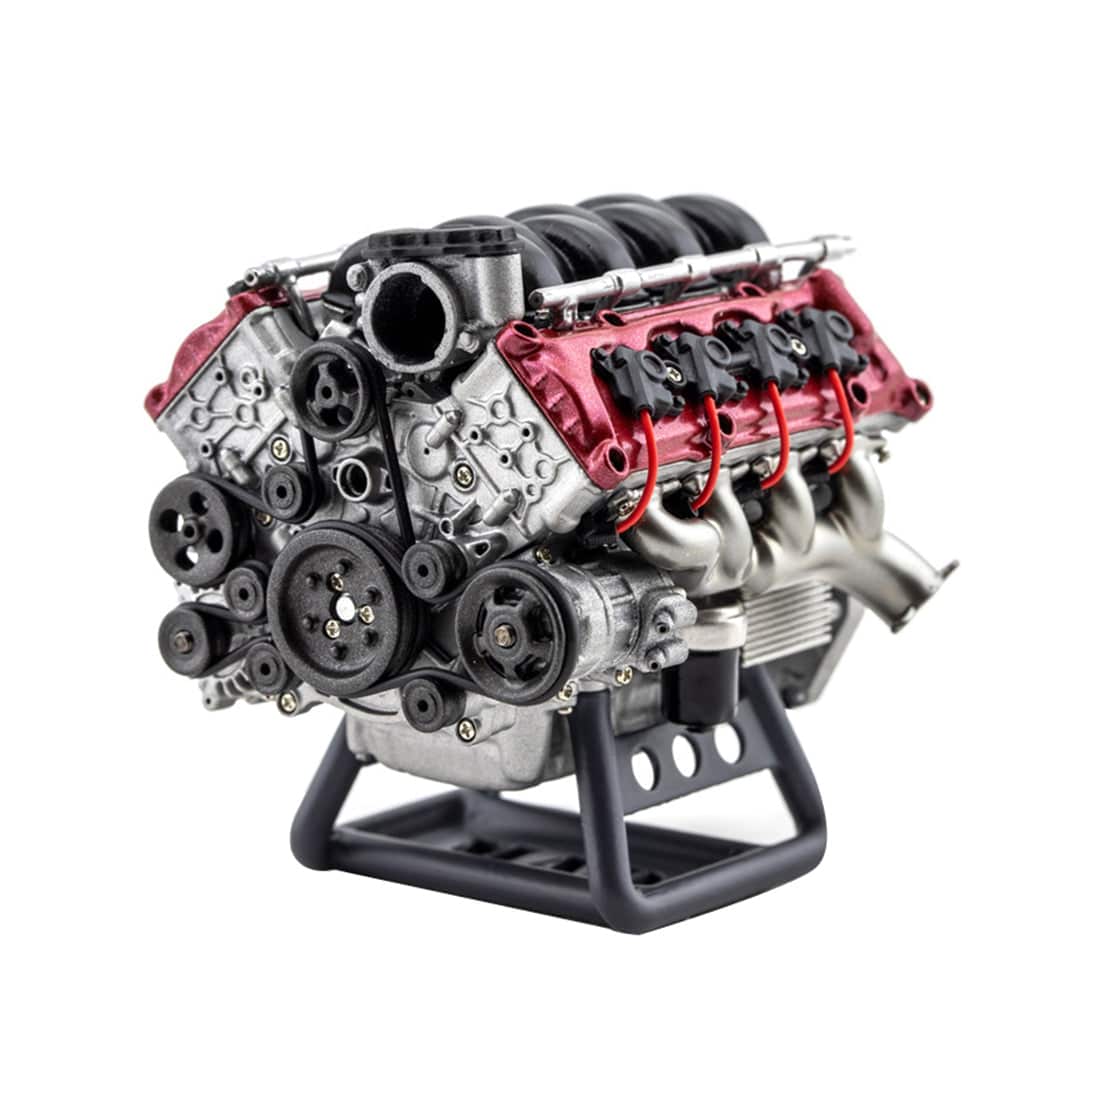 MAD RC DIY V8 Engine Model Kit for Capra VS4-10 Pro - Build Your Own V8 Engine That Works 1